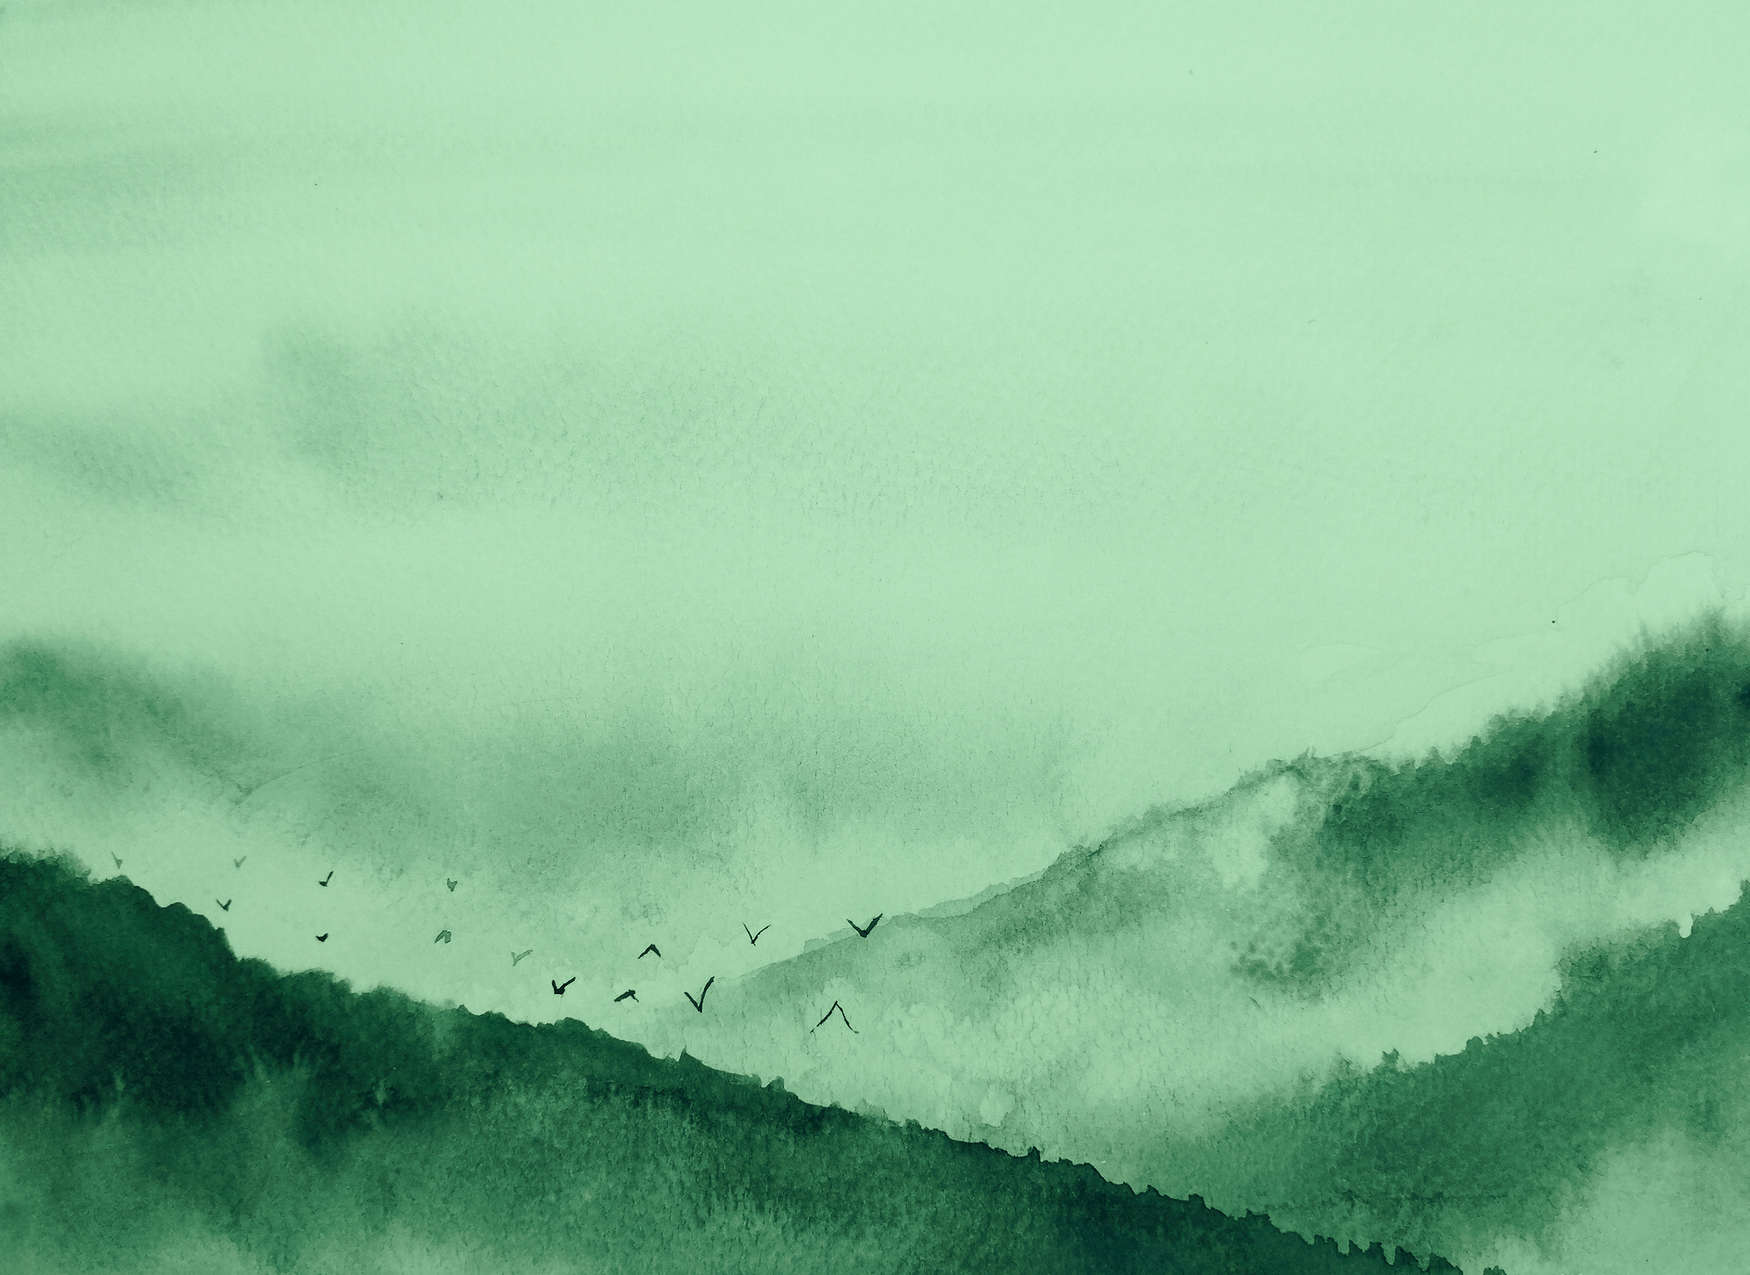             Paysage brumeux style peinture - Vert, Noir
        